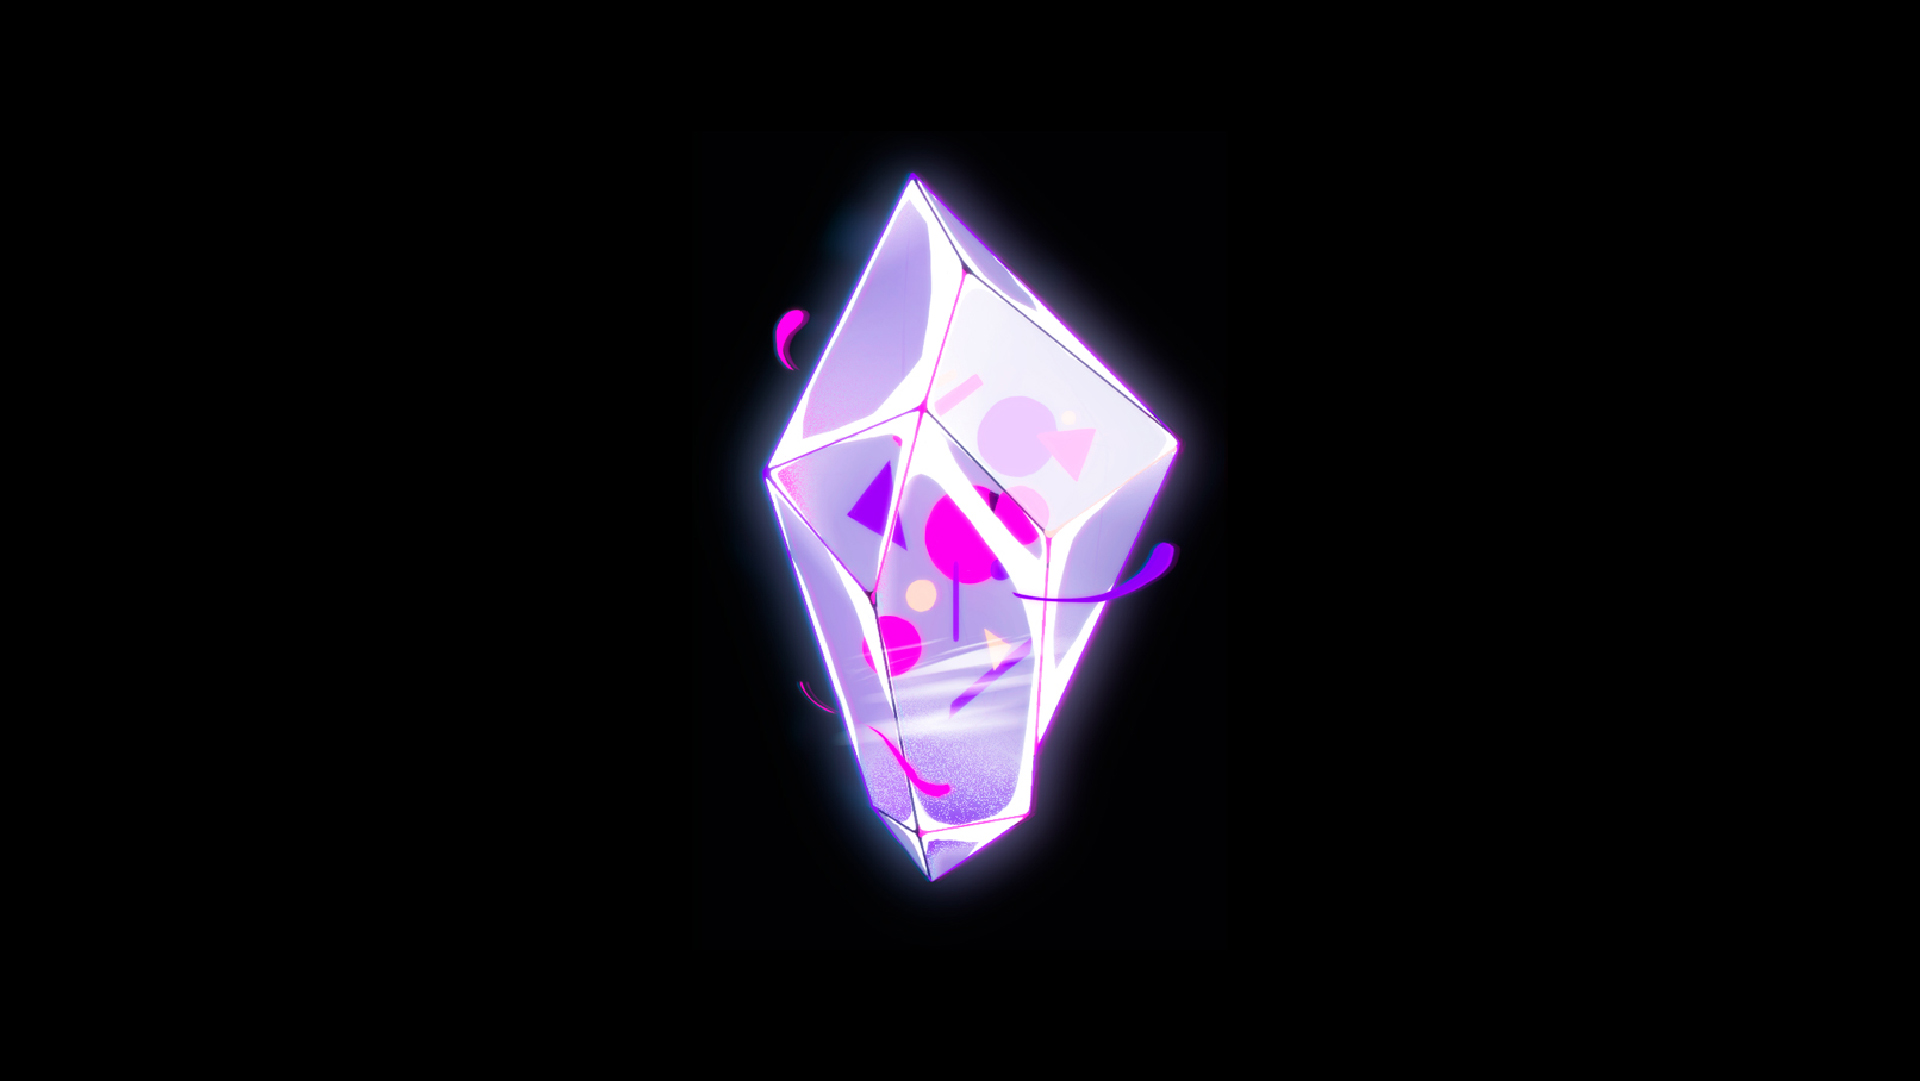 Concept art of a magic diamond